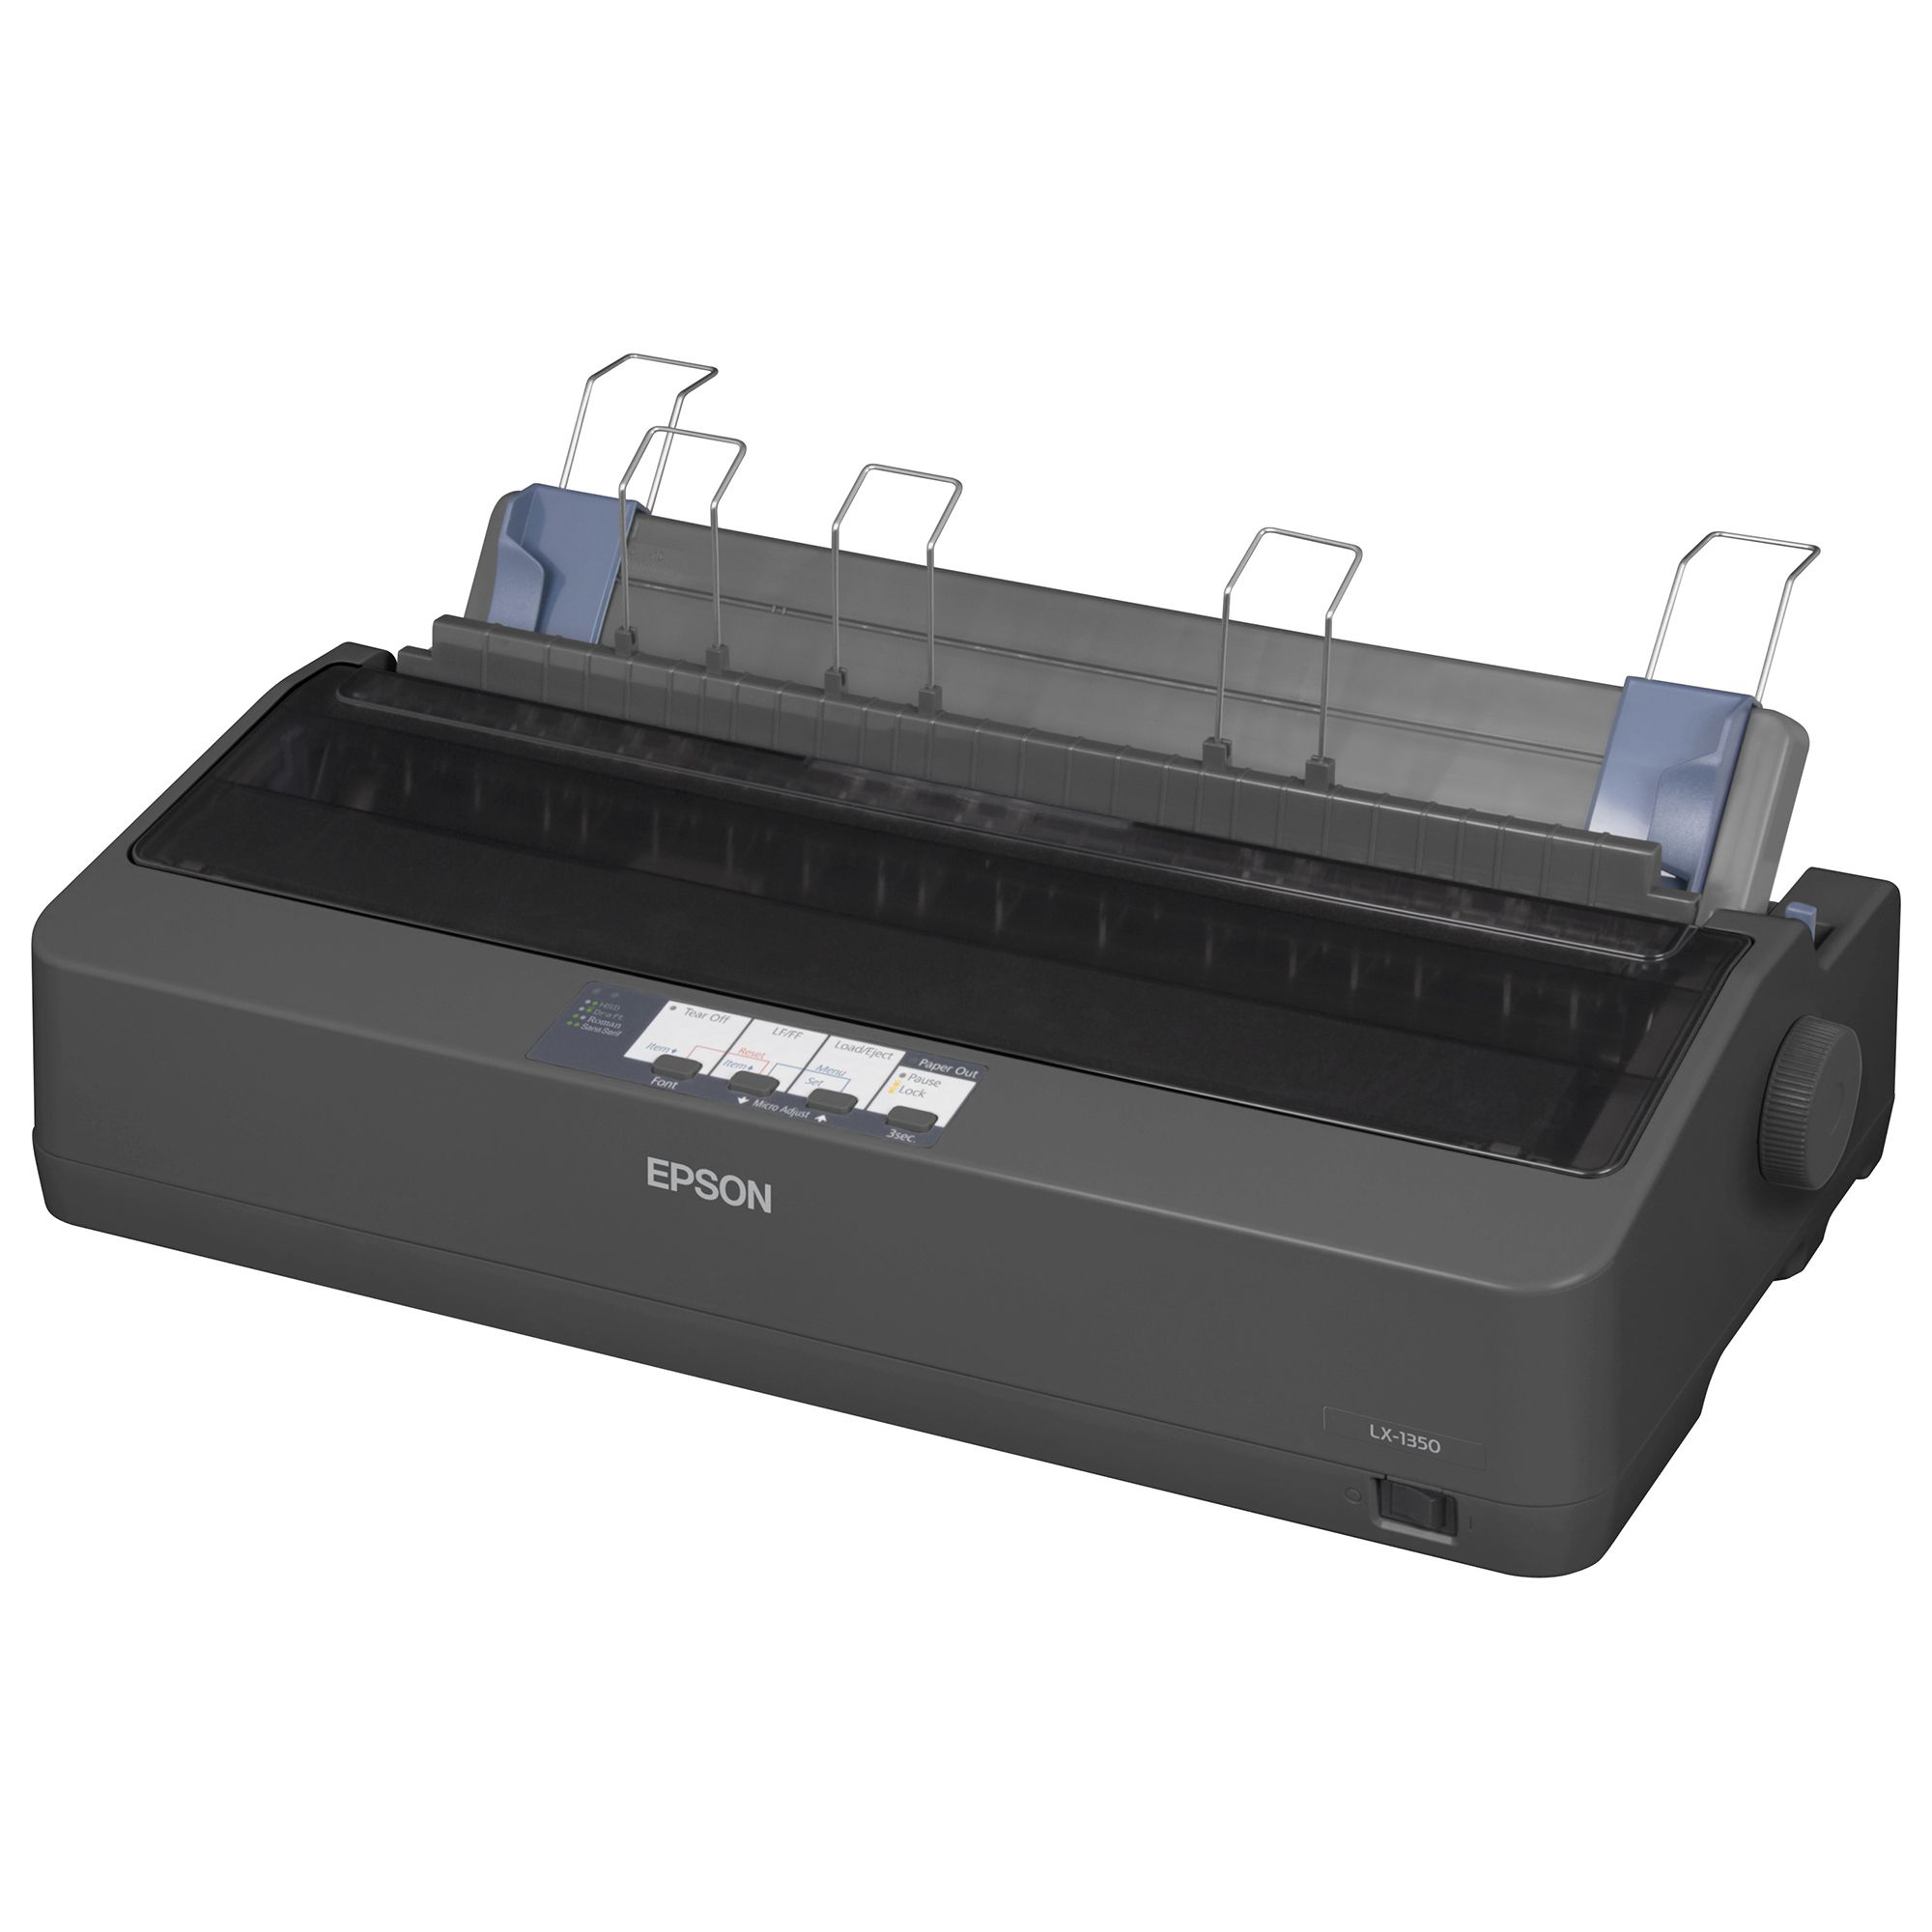  Imprimanta matriciala Epson LX-1350, A3 